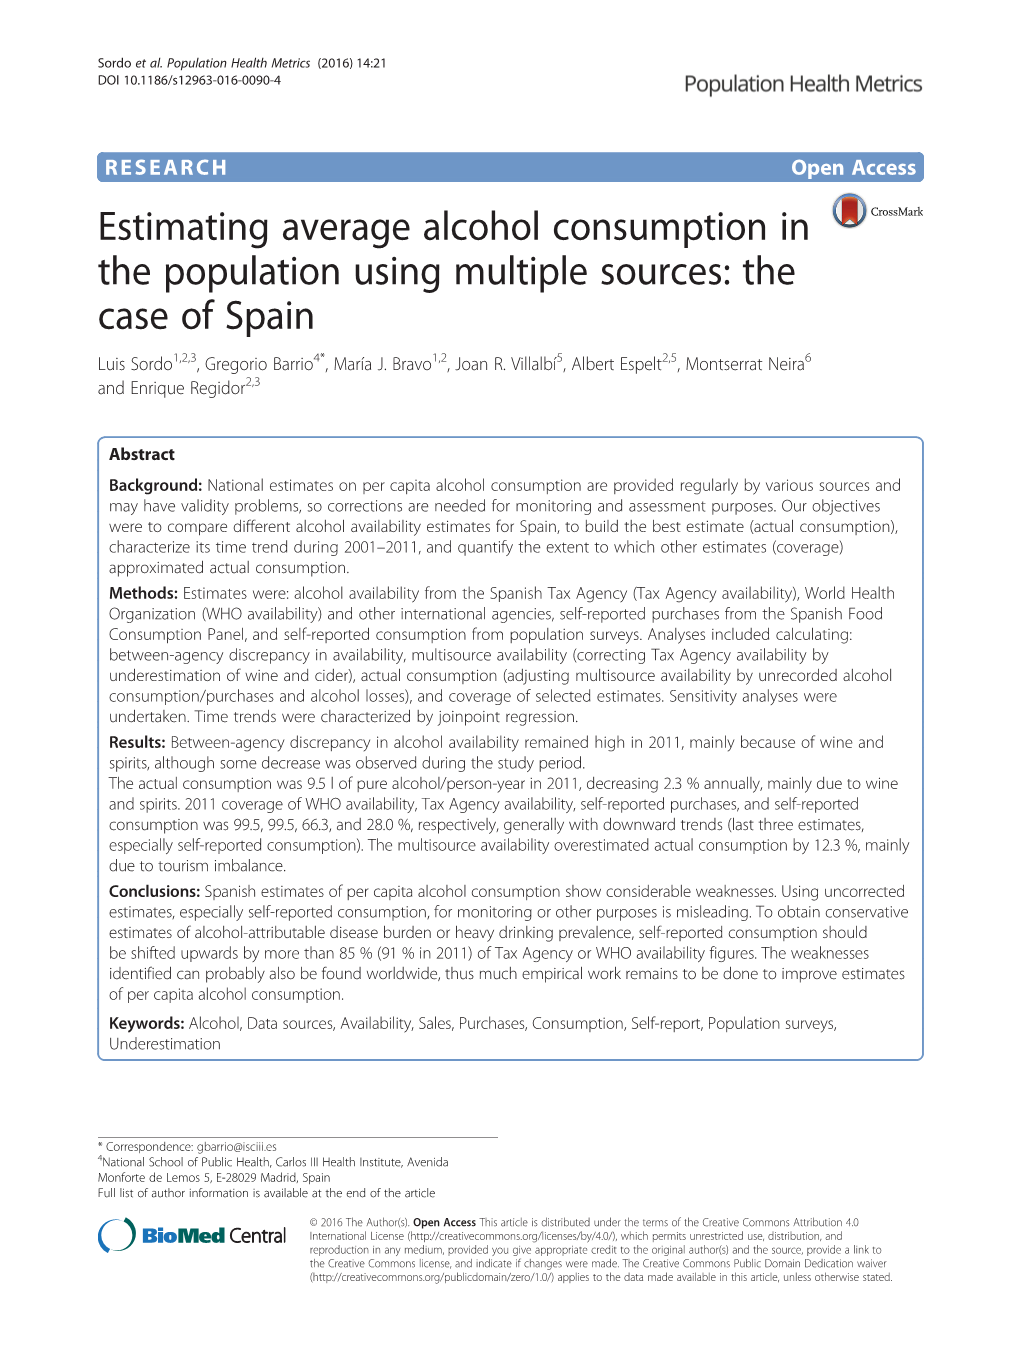 Estimating Average Alcohol Consumption in the Population Using Multiple Sources: the Case of Spain Luis Sordo1,2,3, Gregorio Barrio4*, María J